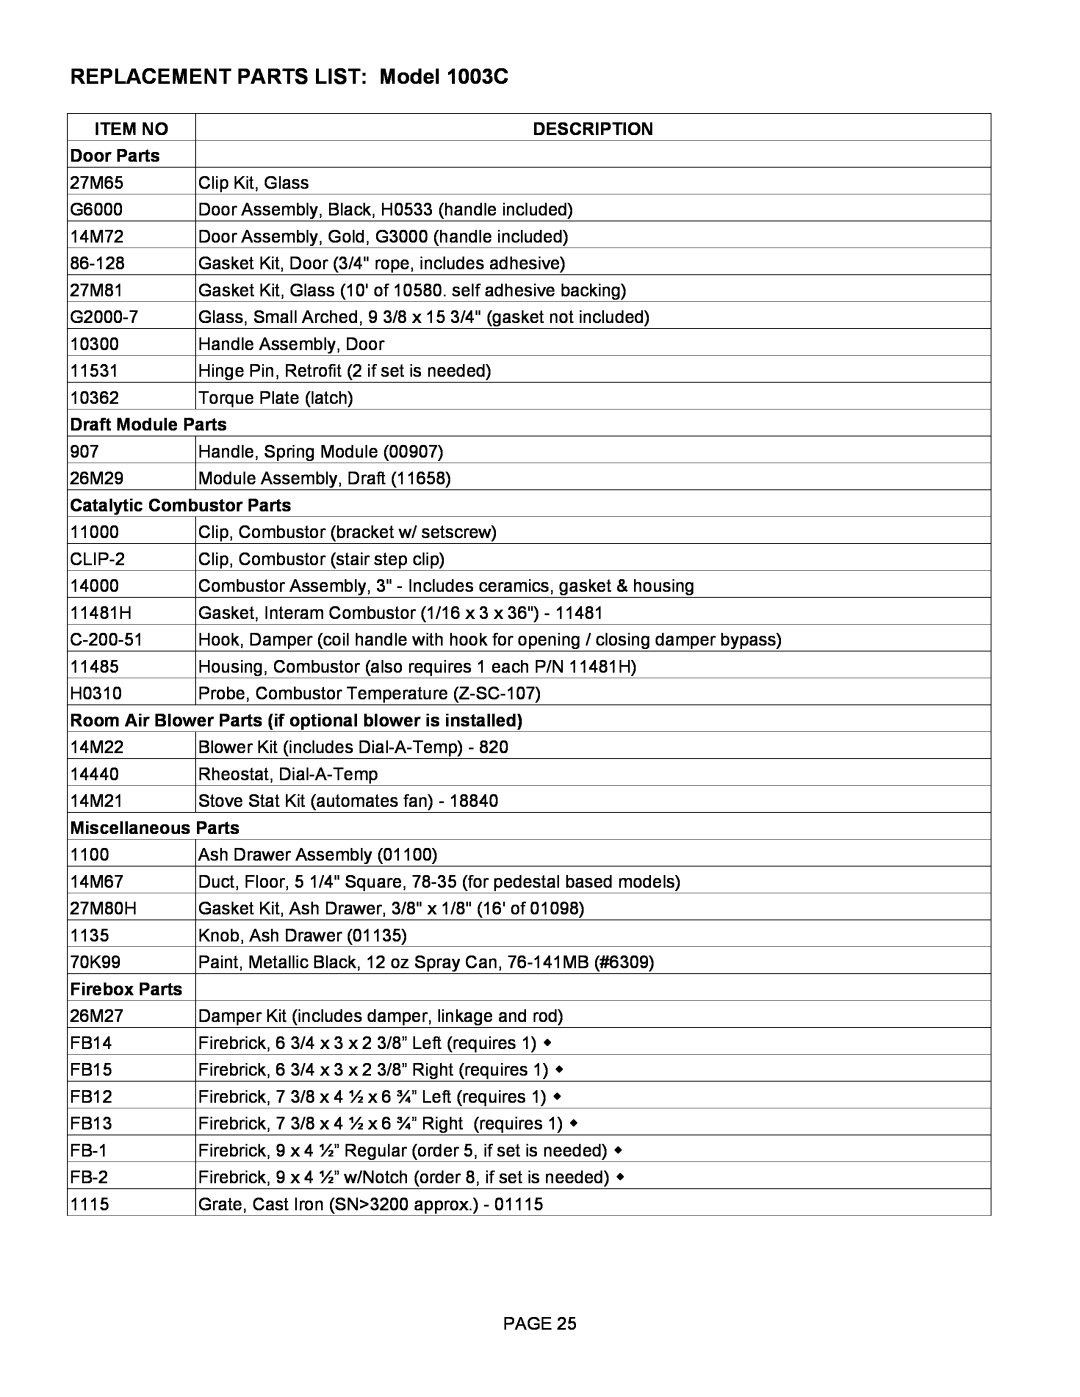 Lennox Hearth REPLACEMENT PARTS LIST: Model 1003C, Item No, Description, Door Parts, Draft Module Parts, Firebox Parts 